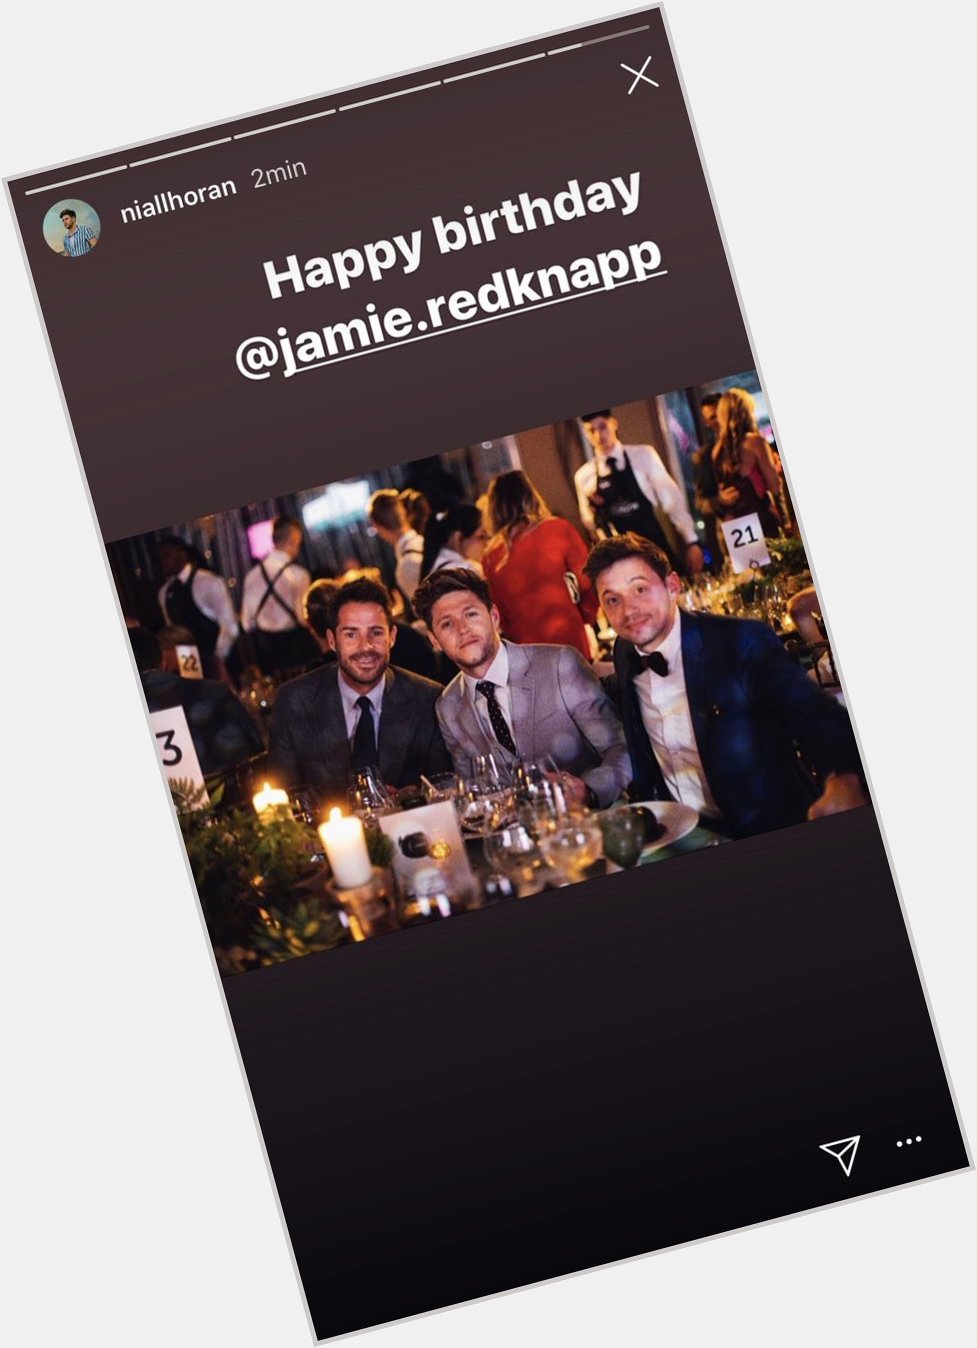  via IG story 
We wish a happy birthday to Jamie Redknapp ! 